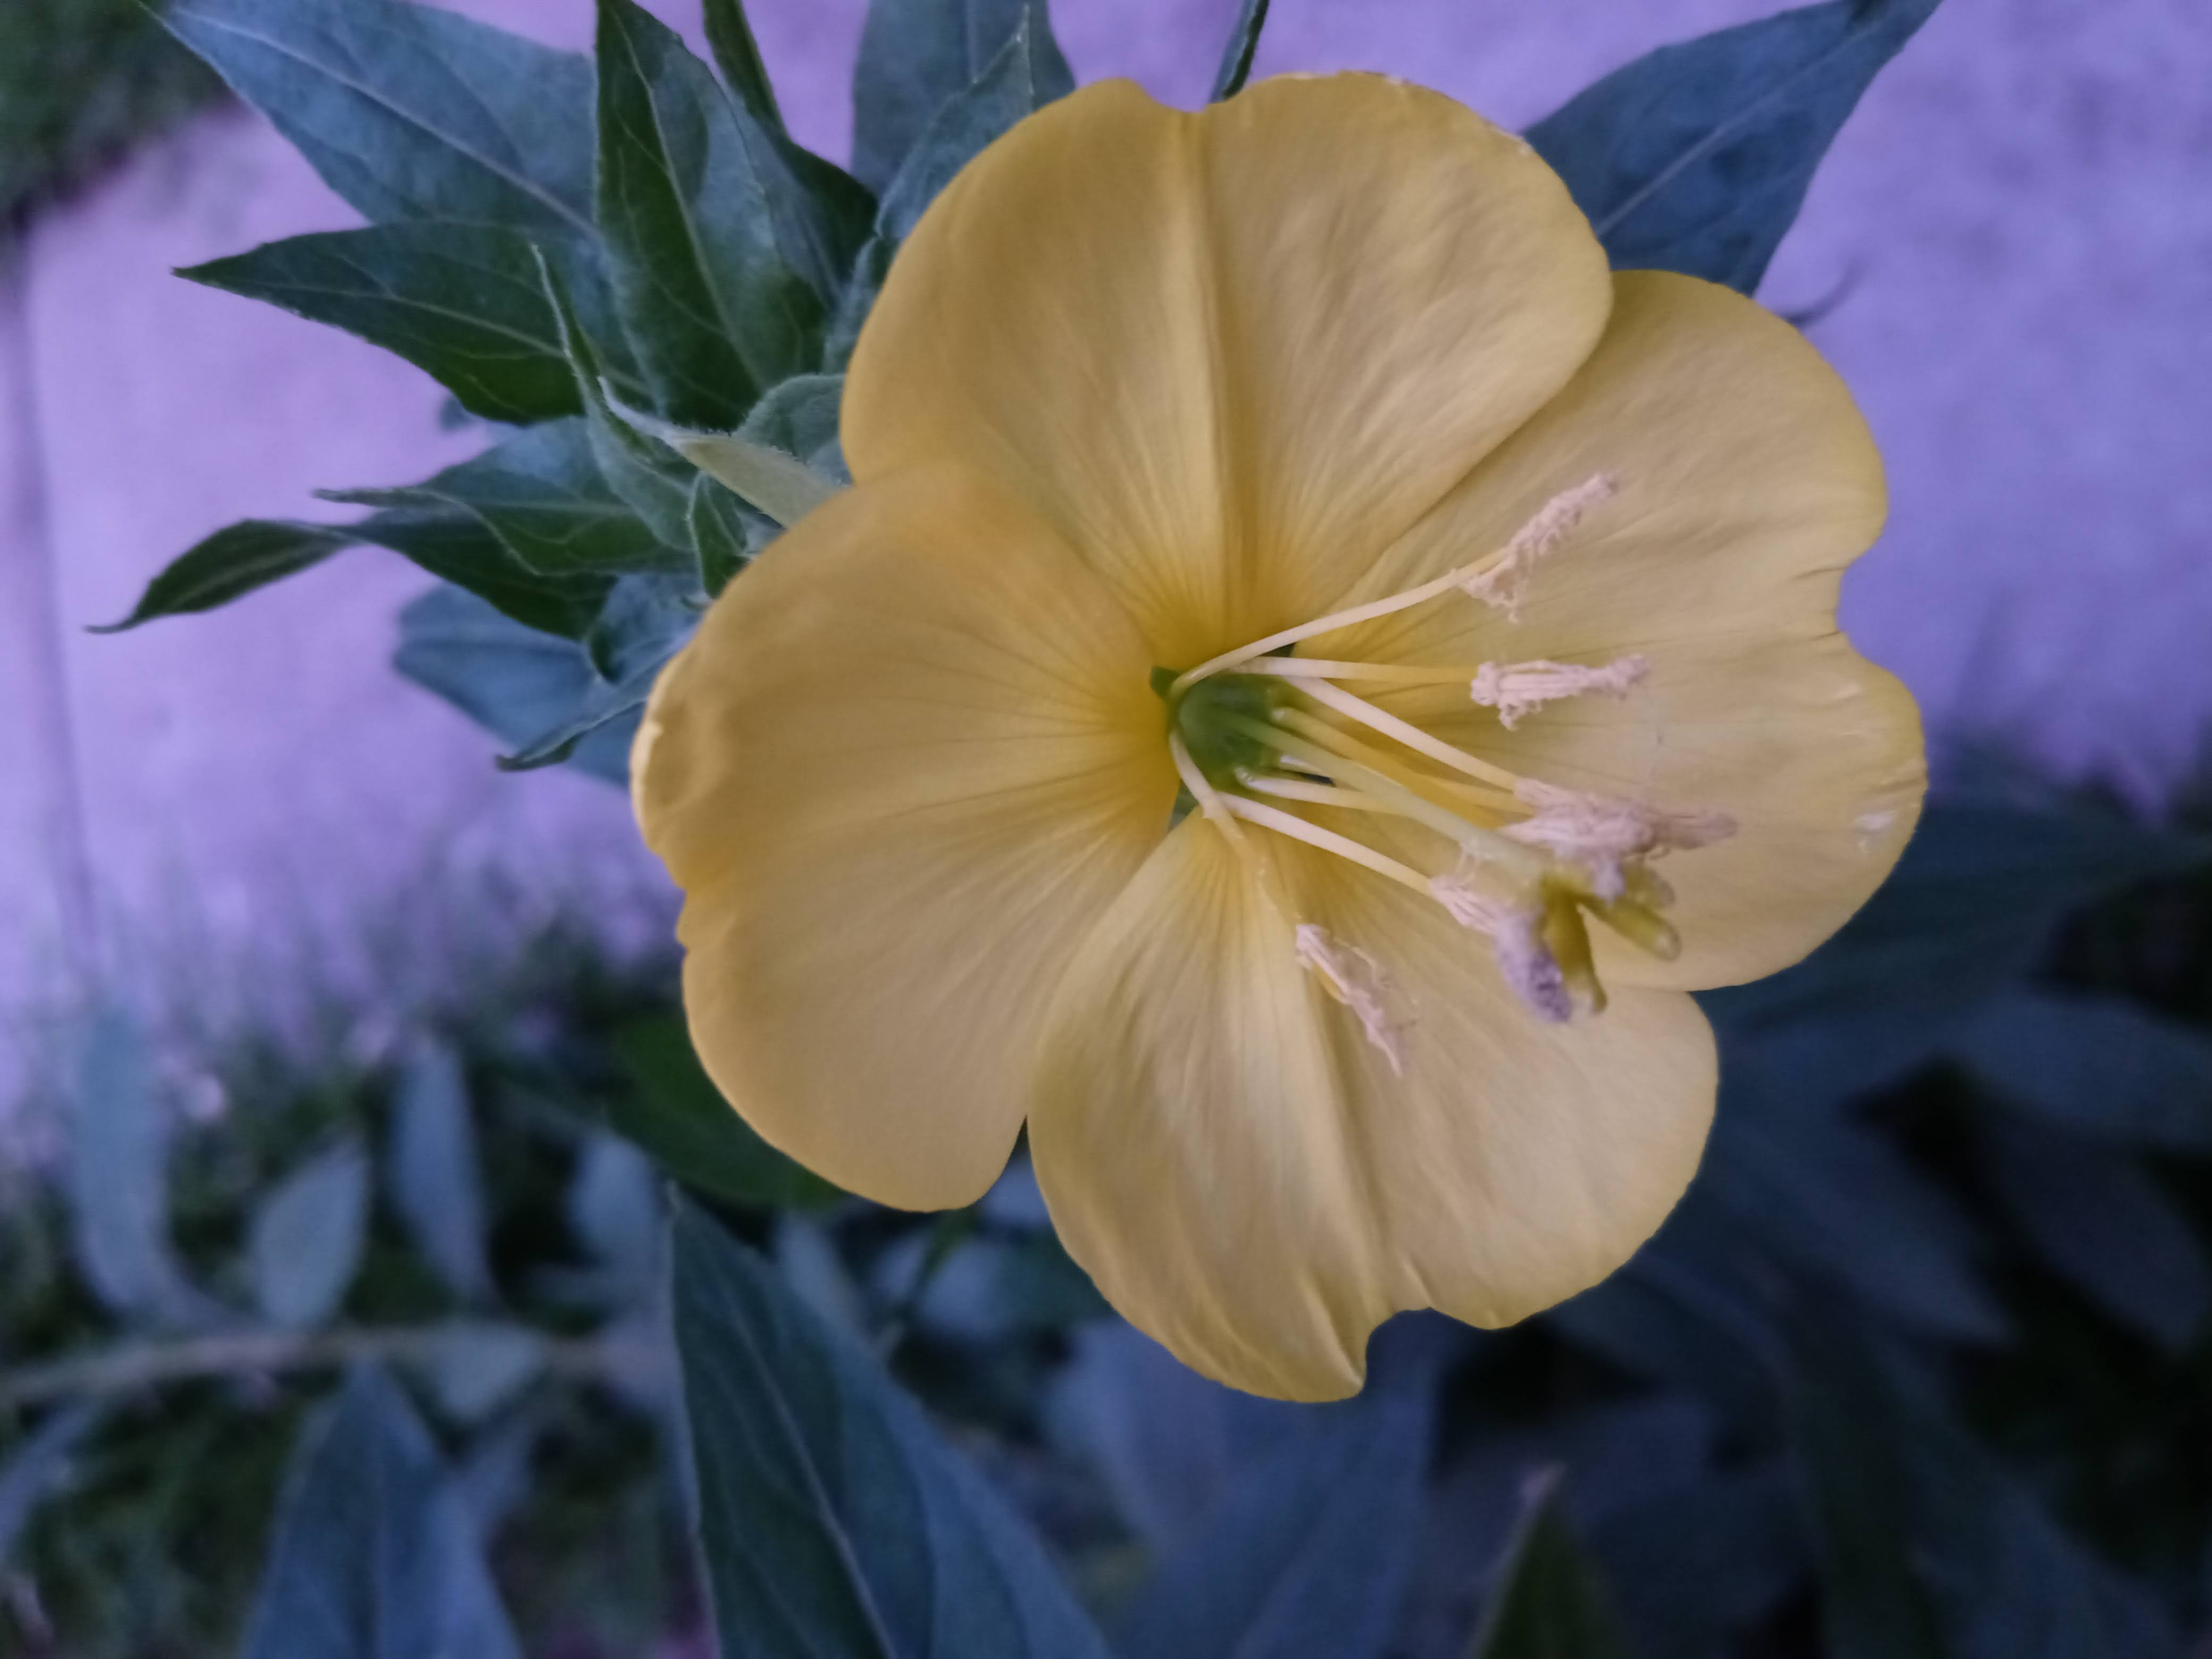 Evening primrose. A welcome surprise.